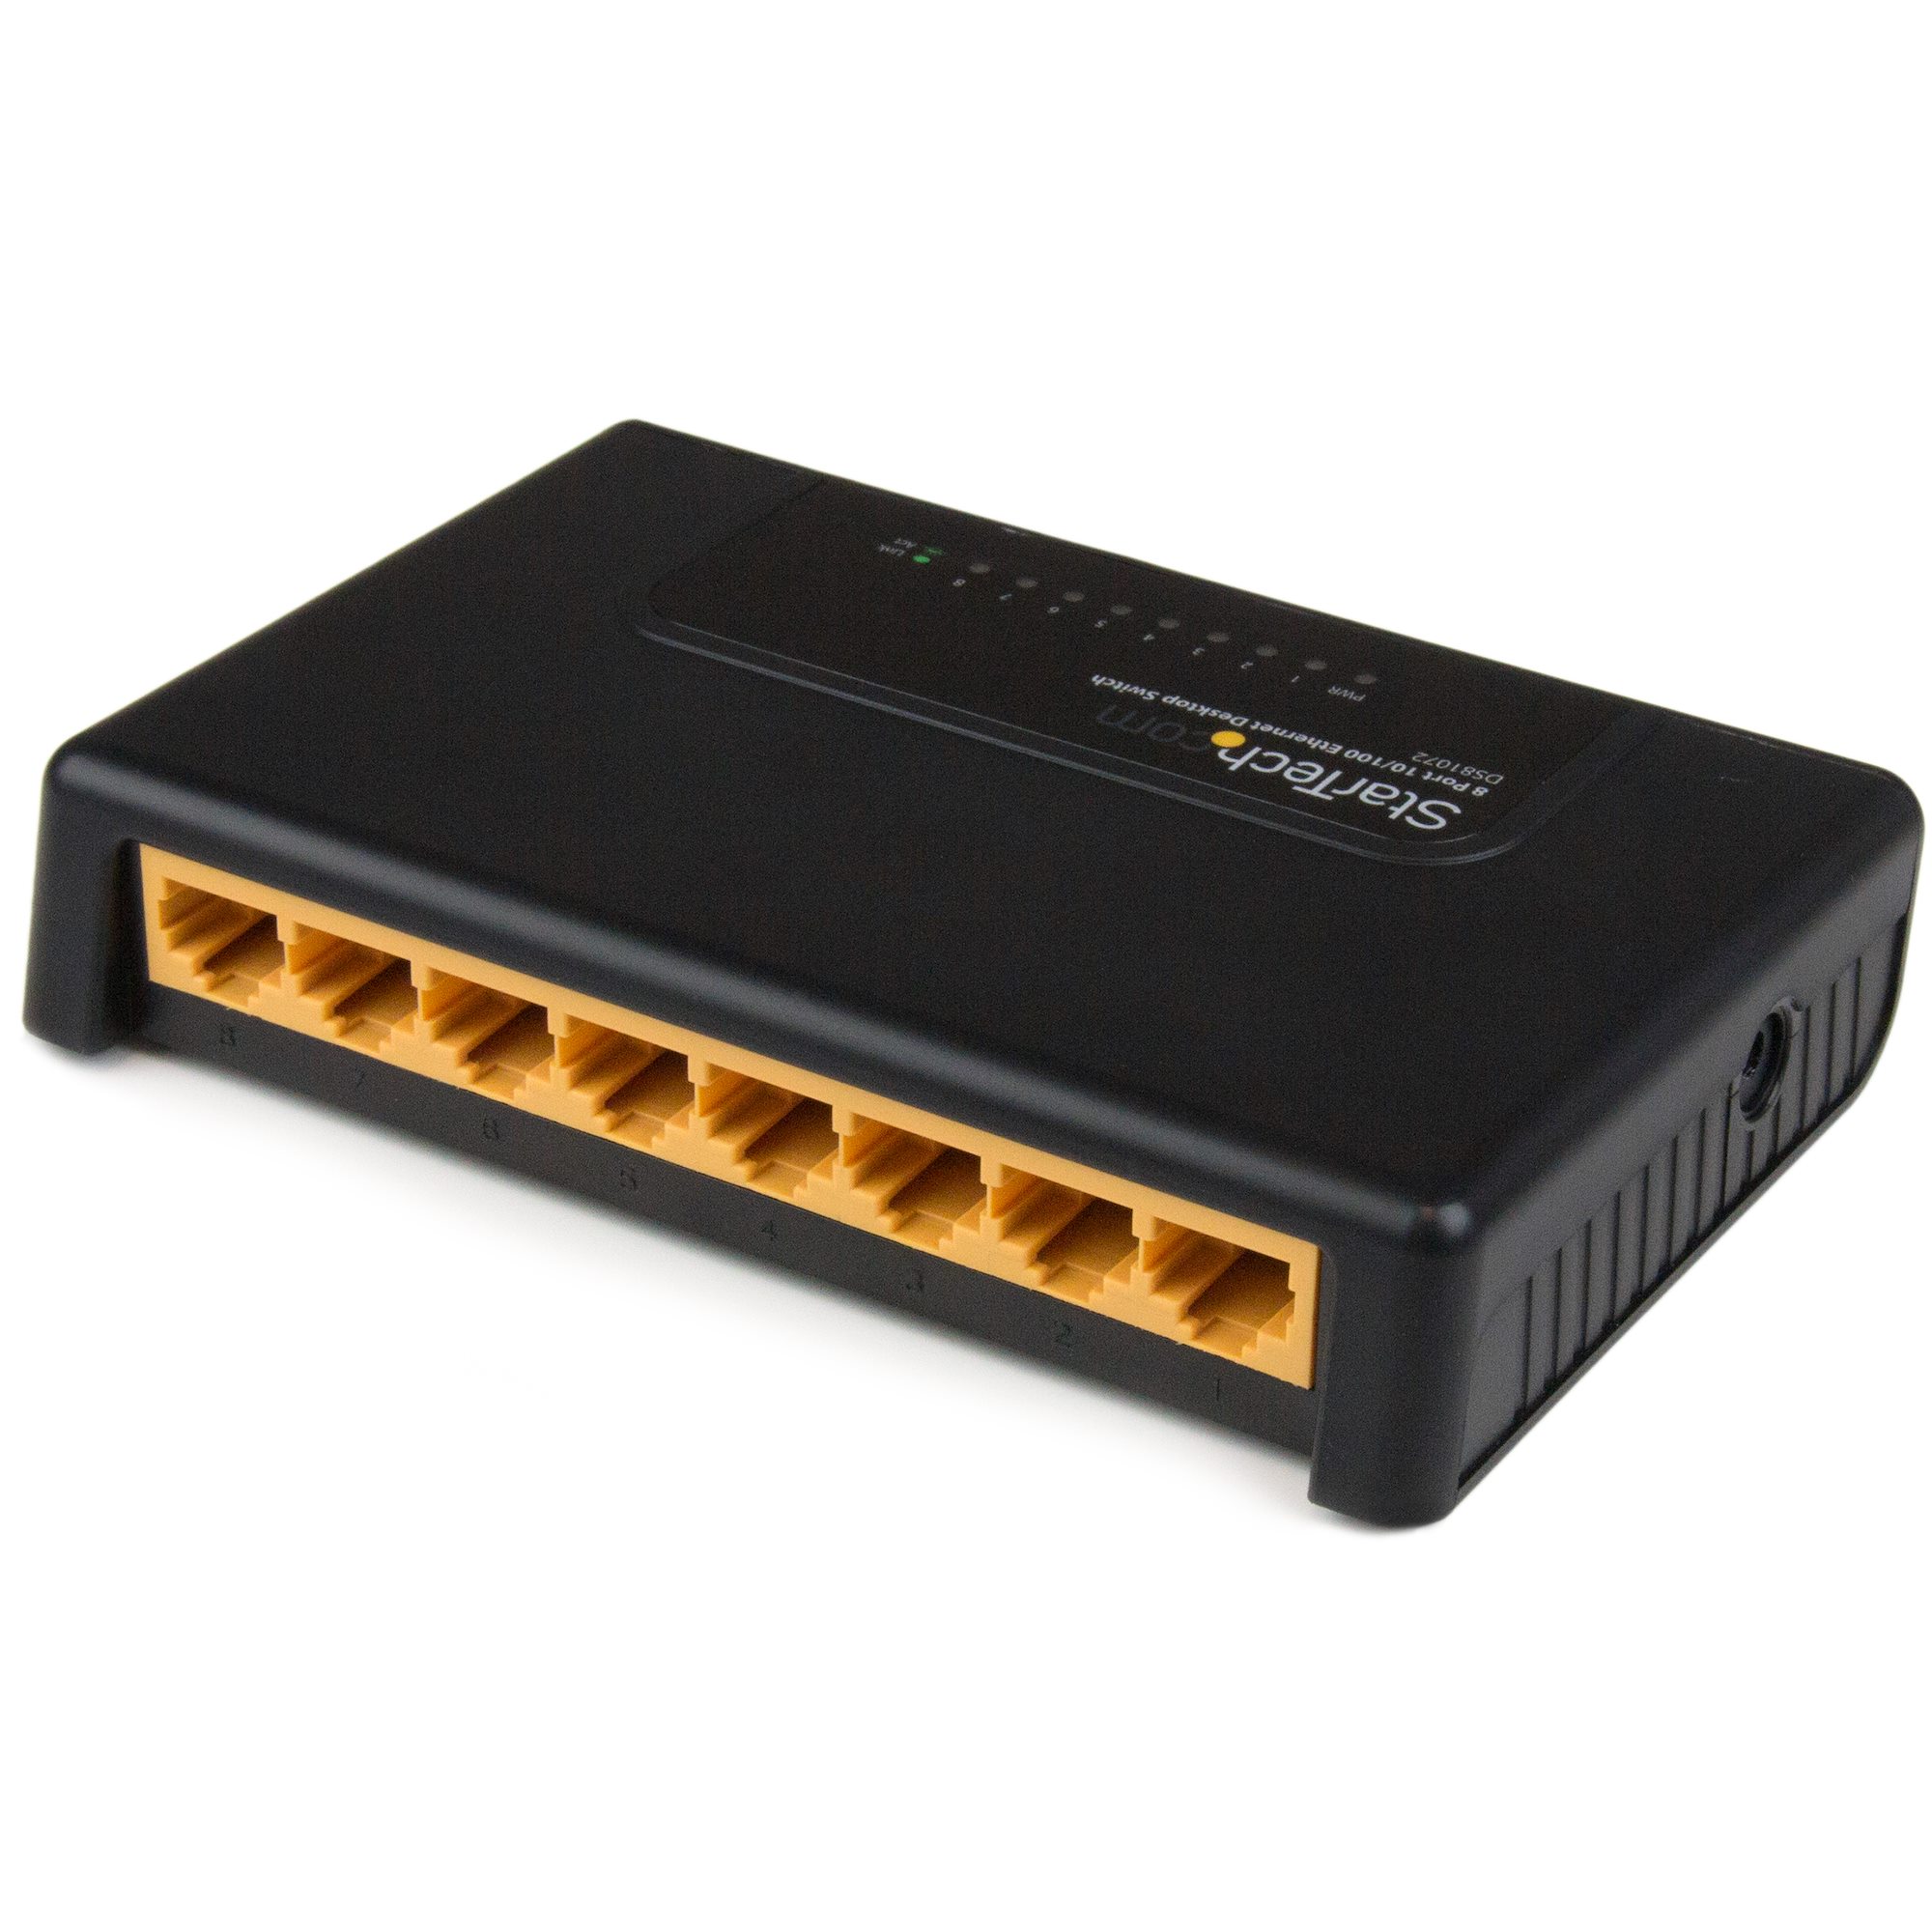 Порт fast Ethernet. Гигабитный интернет. Fast Ethernet Mii. UNEX NEXTHUB hd080 8 Port.